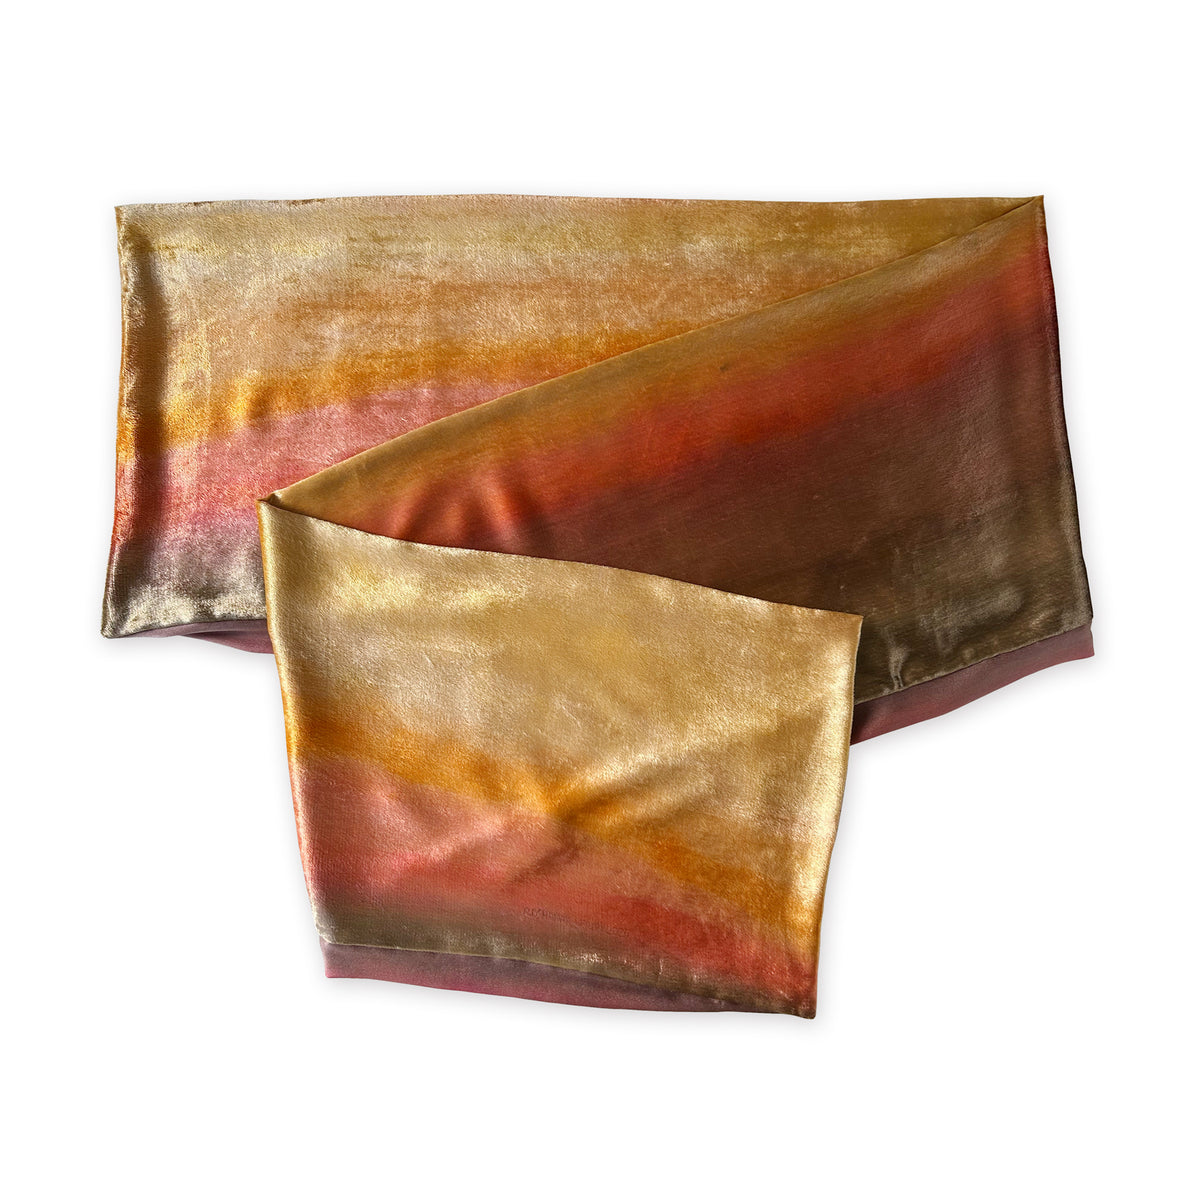 velvet-scarf-hand-painted-184x32cm-yellow-orange-red-brown-otta-italy-2342